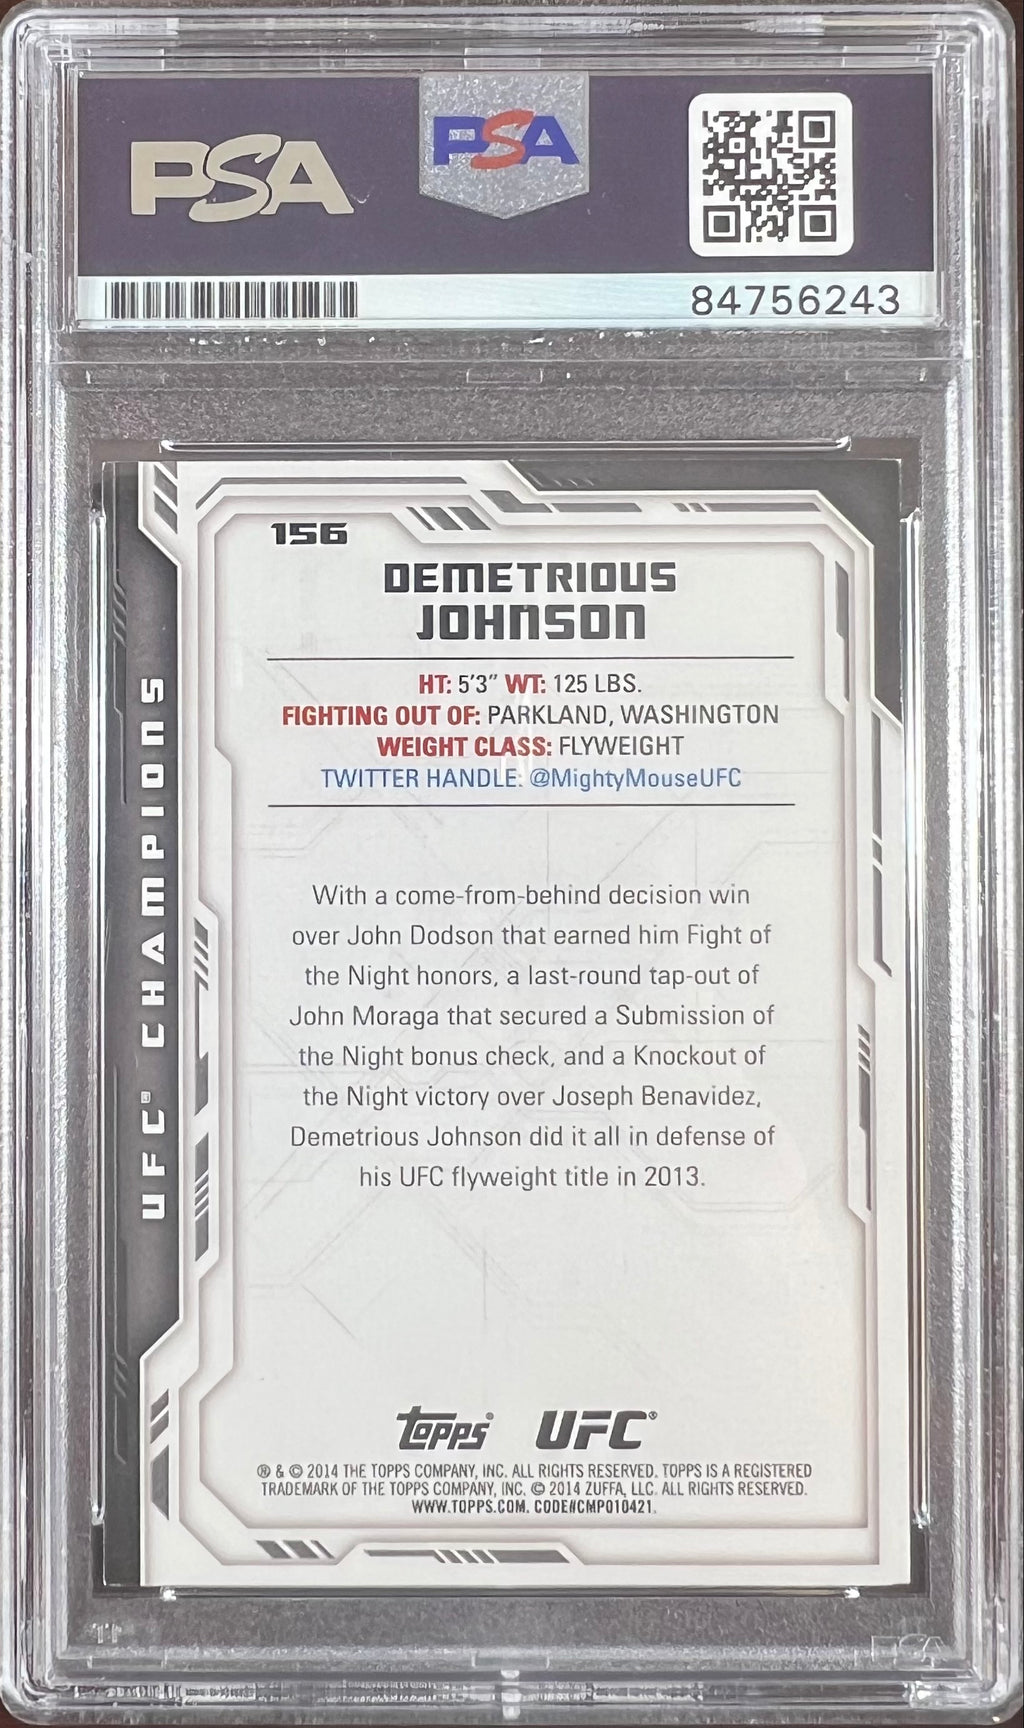 Demetrious Johnson autographed 2014 Topps card #156 UFC PSA Encapsulated